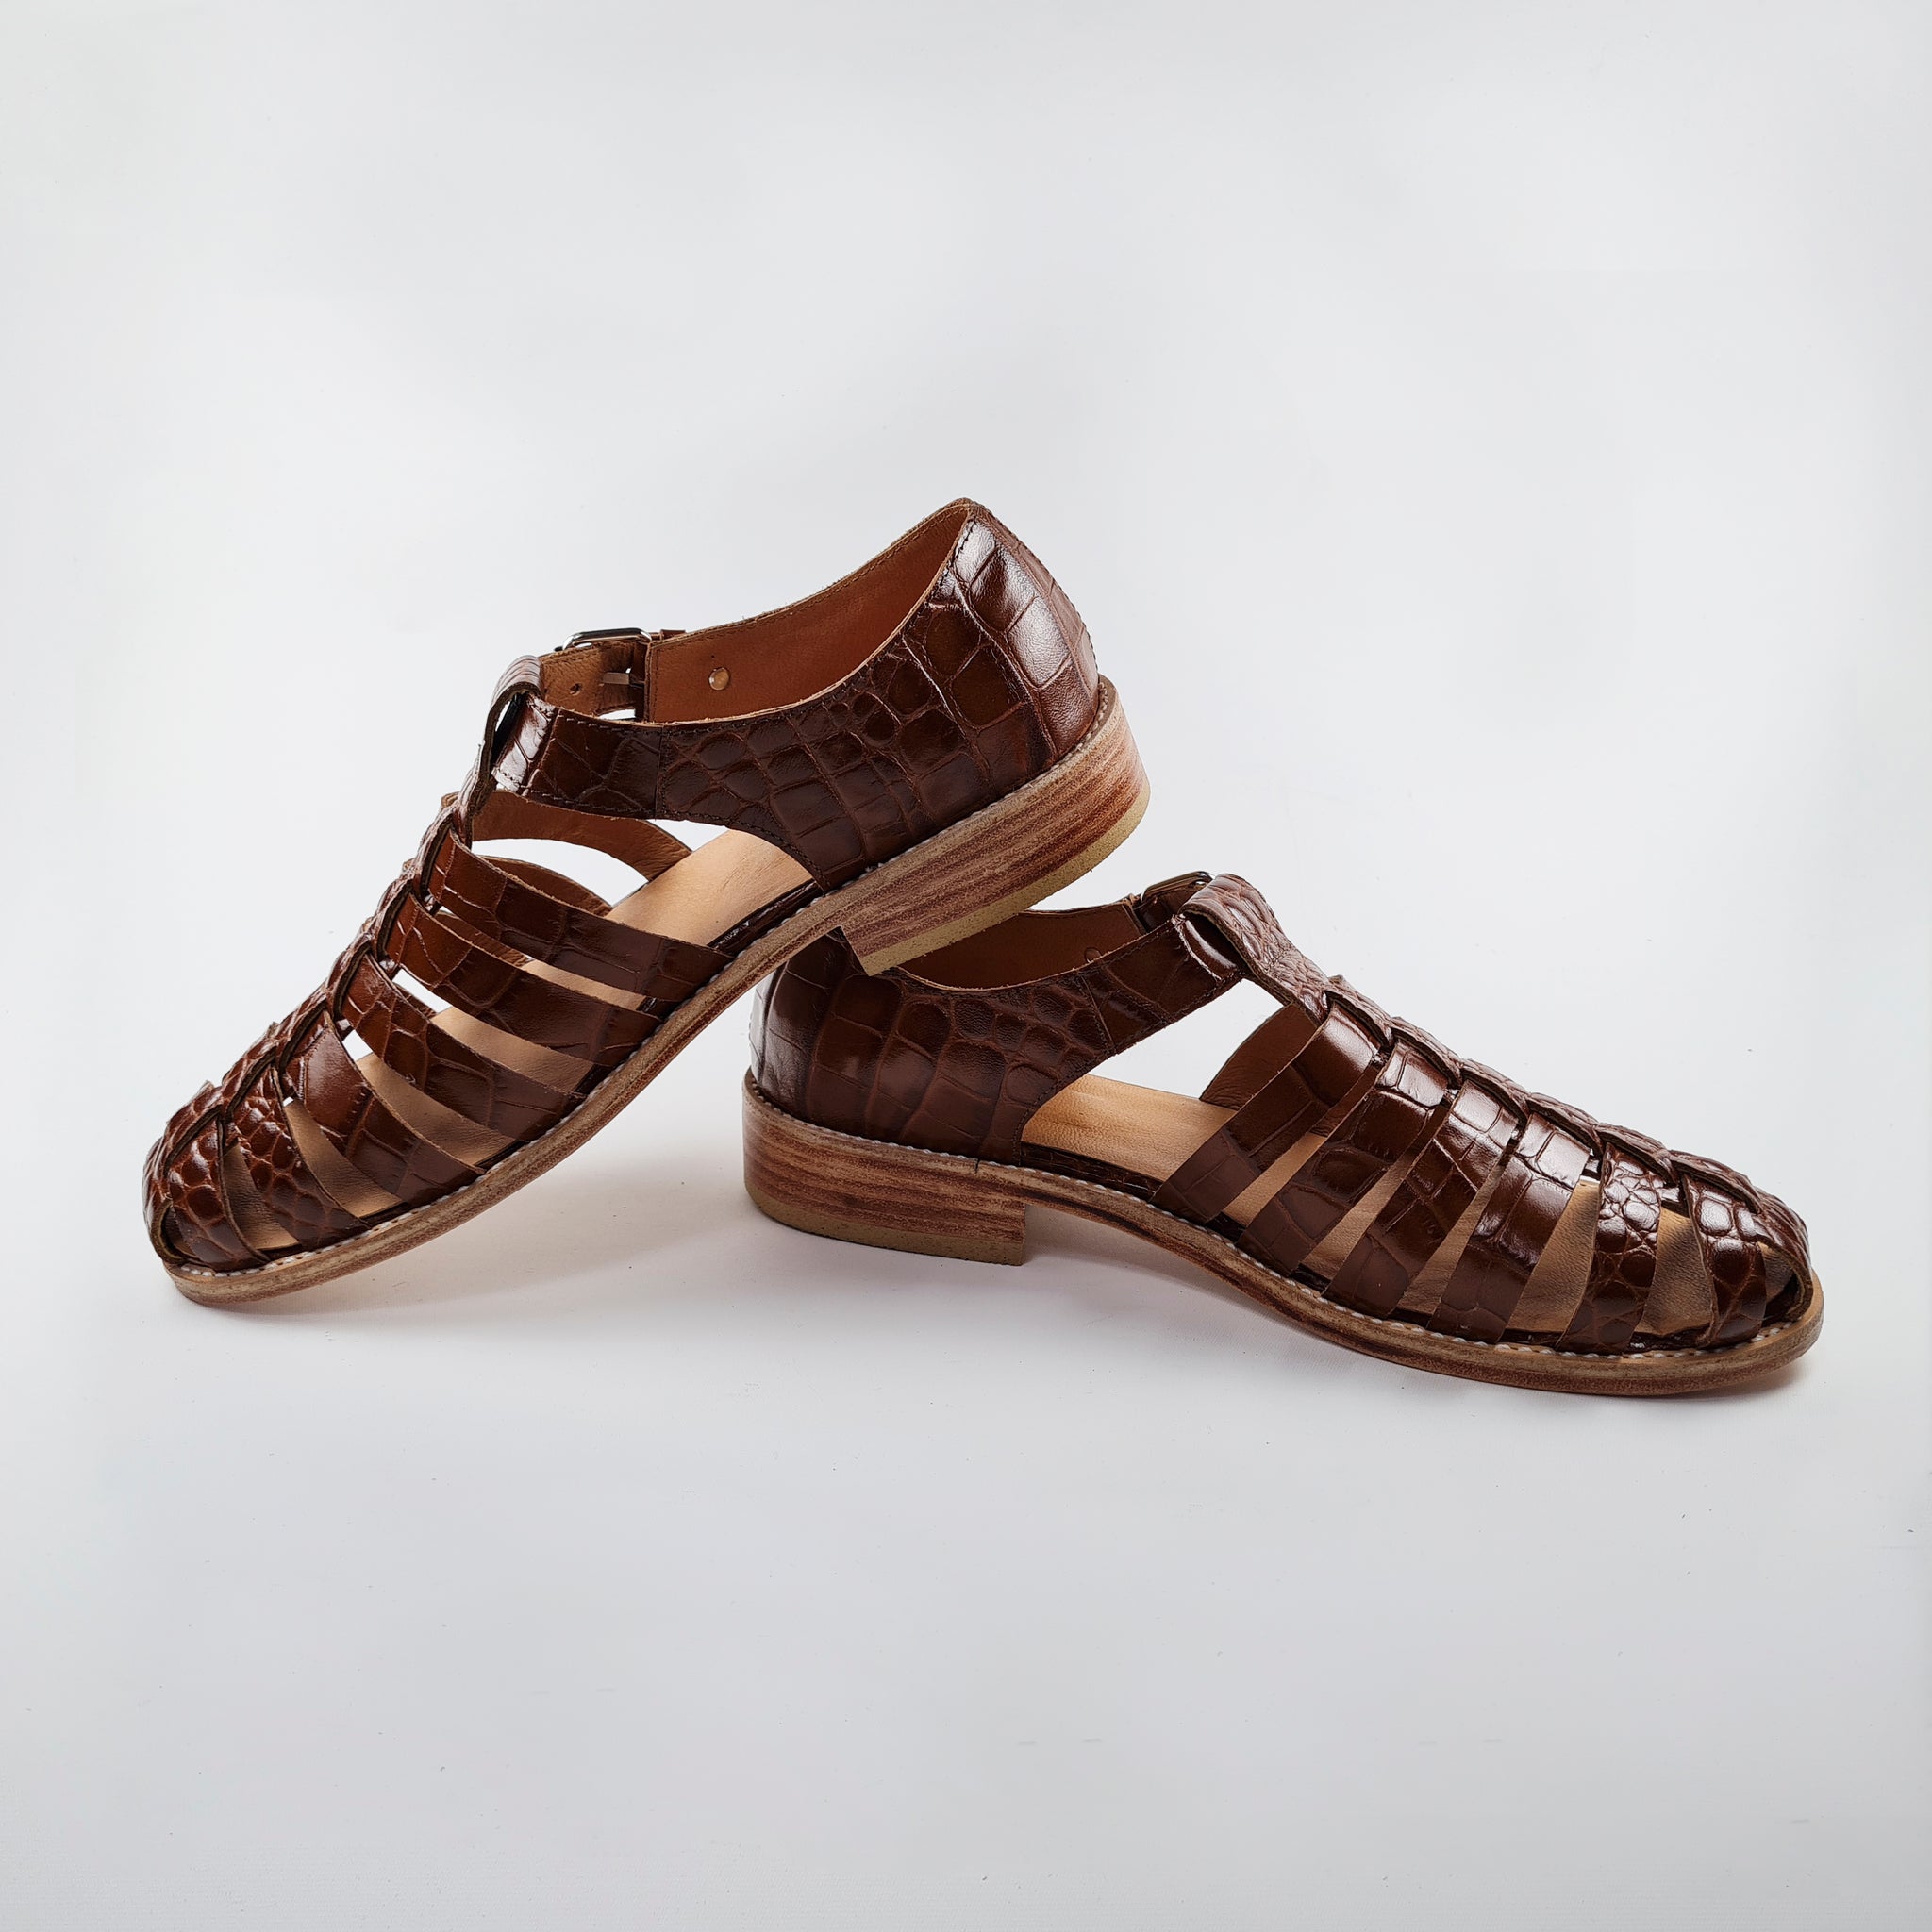 Handmade leather Fisherman sandals in brown colour – daz studio